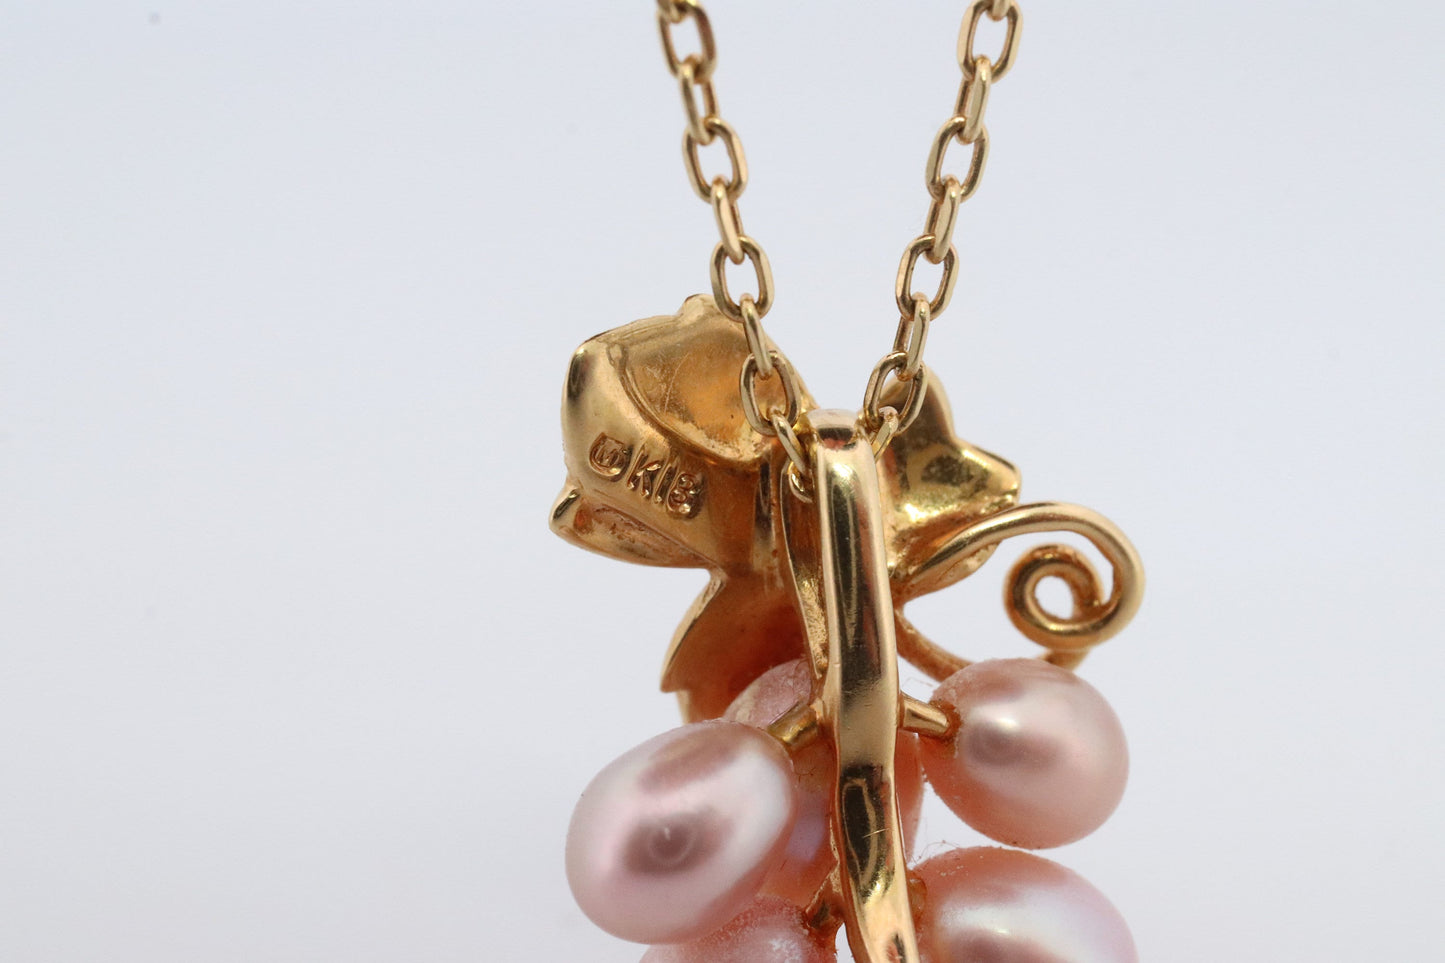 Mikimoto Necklace. Vintage 18k Gold Mikimoto Pearl Cluster pendant. Mikimoto Pearl Grape Vine pendant necklace.